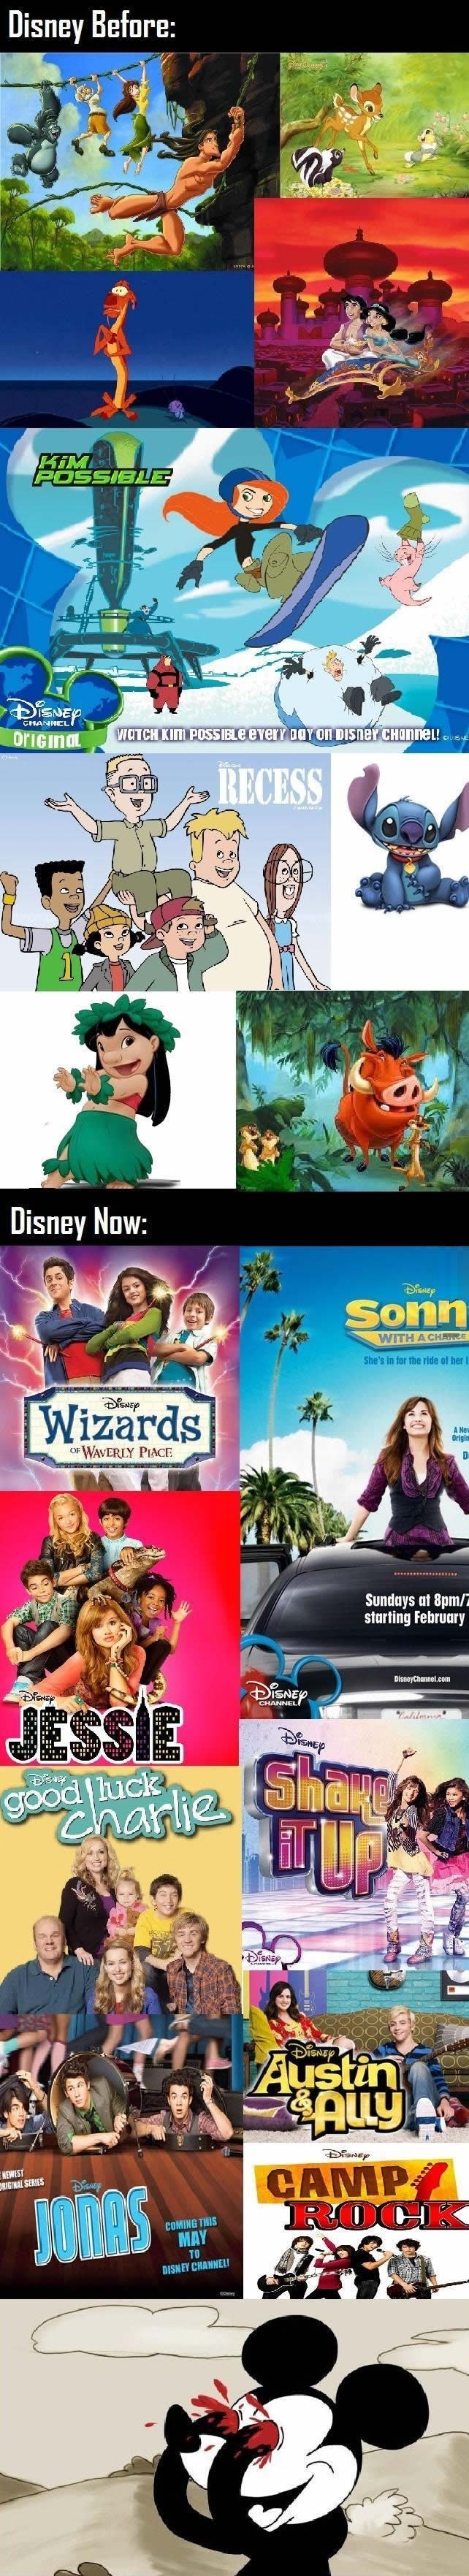 Disney nowadays